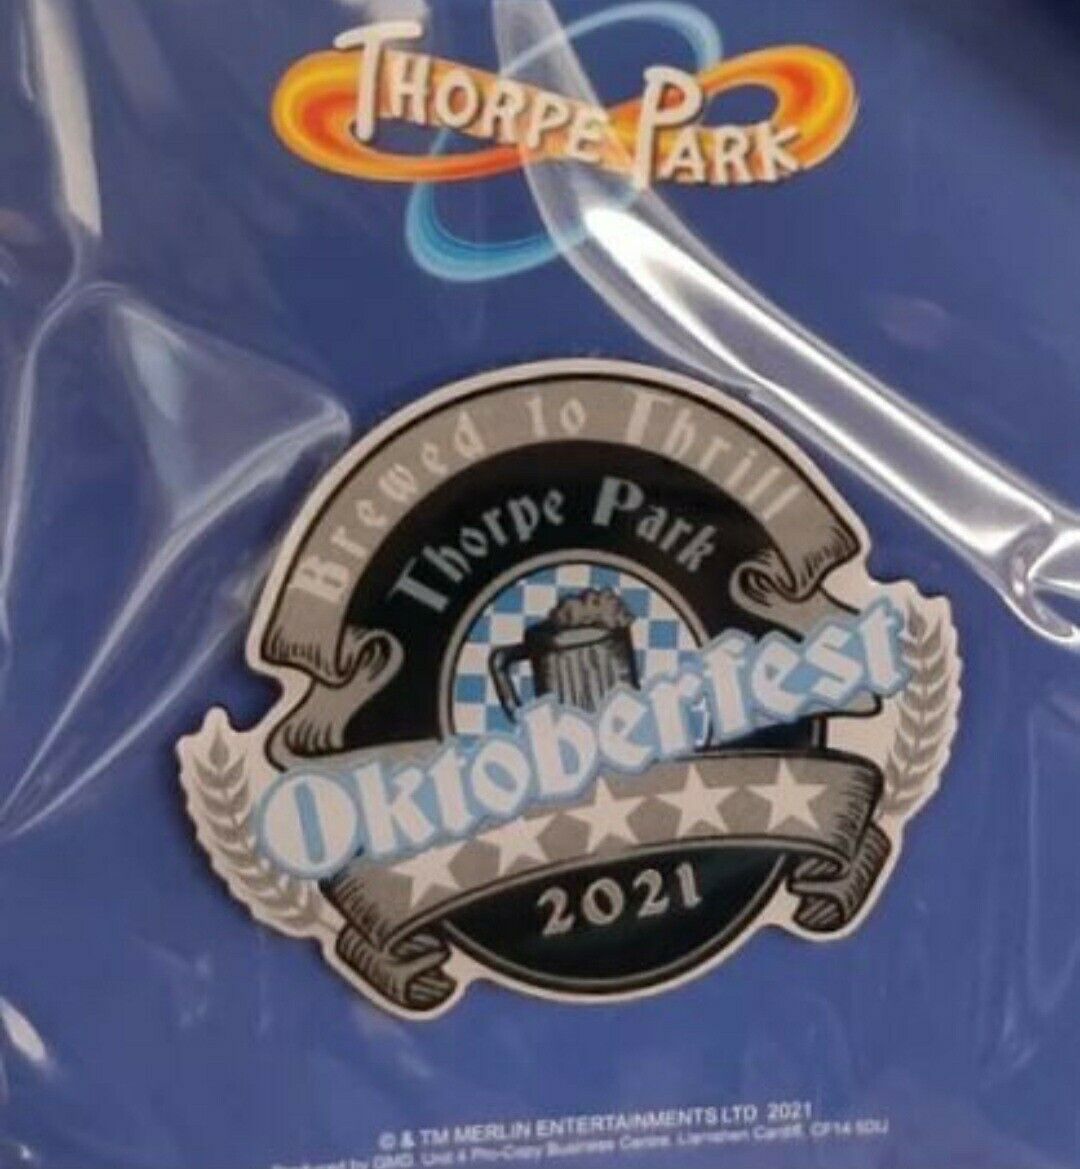 Thorpe Park Resort - Oktoberfest 2021 Logo Pin Badge